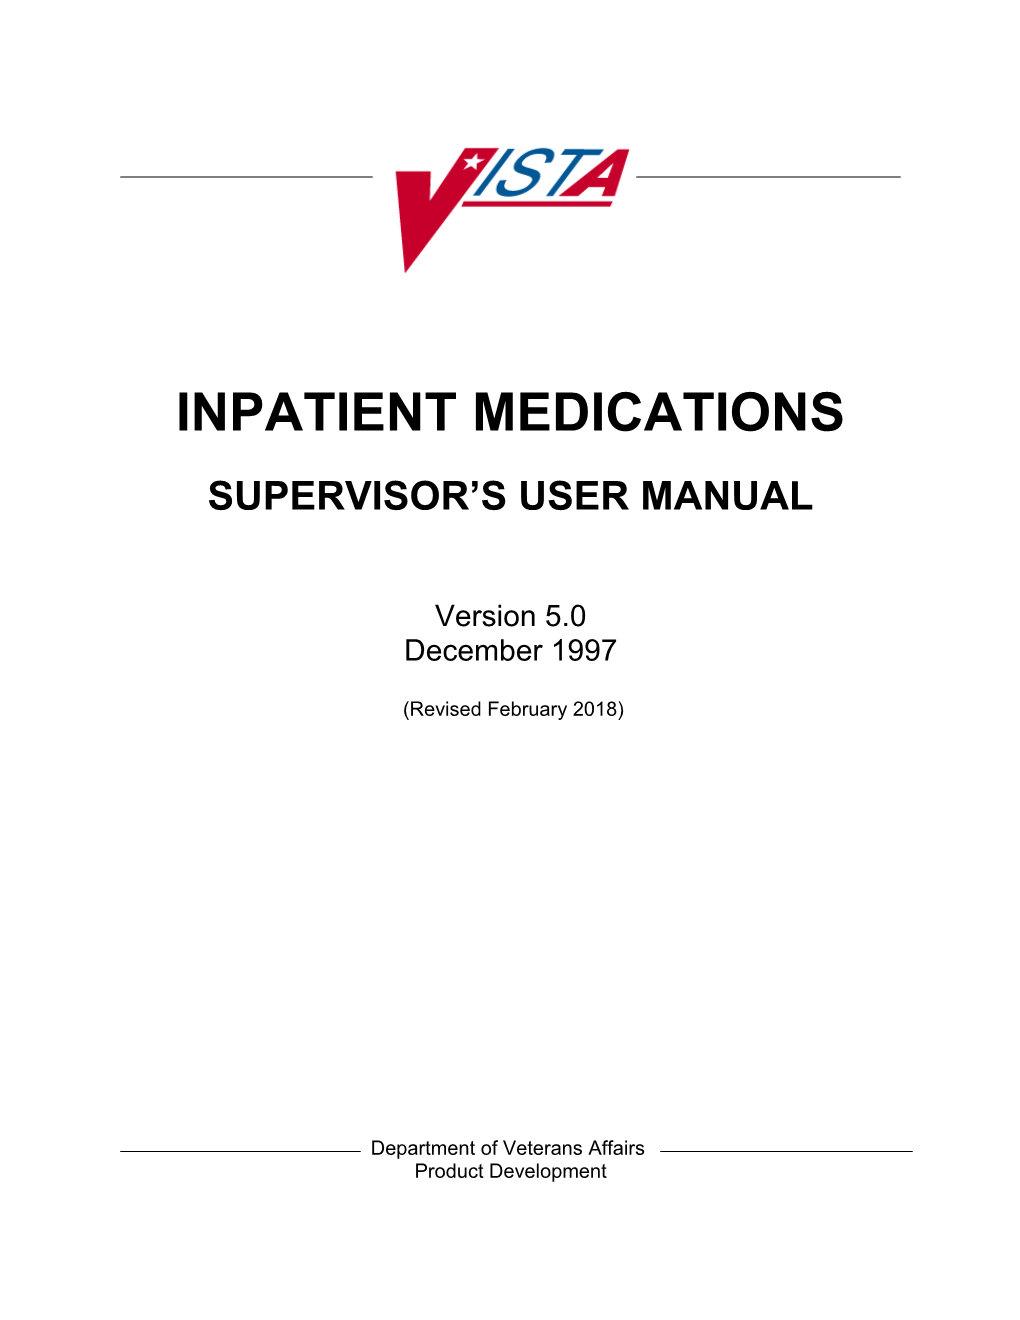 Inpatient Medications Supervisor's User Manual